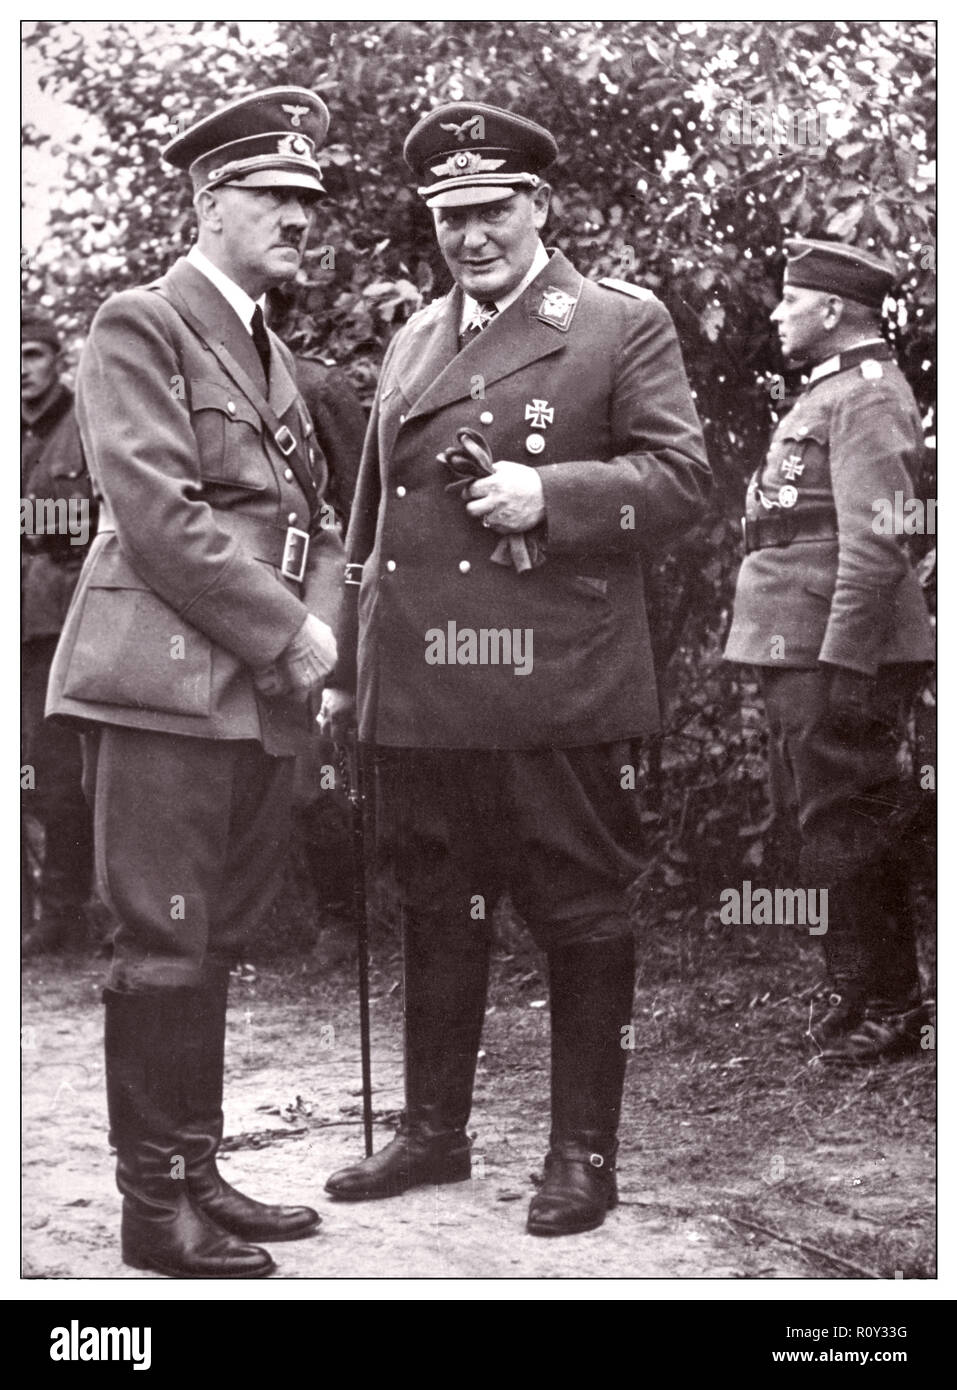 WW2 Nazi leaders Adolf Hitler and Hermann Goering (Goring) in military uniform 1939 World War II Stock Photo